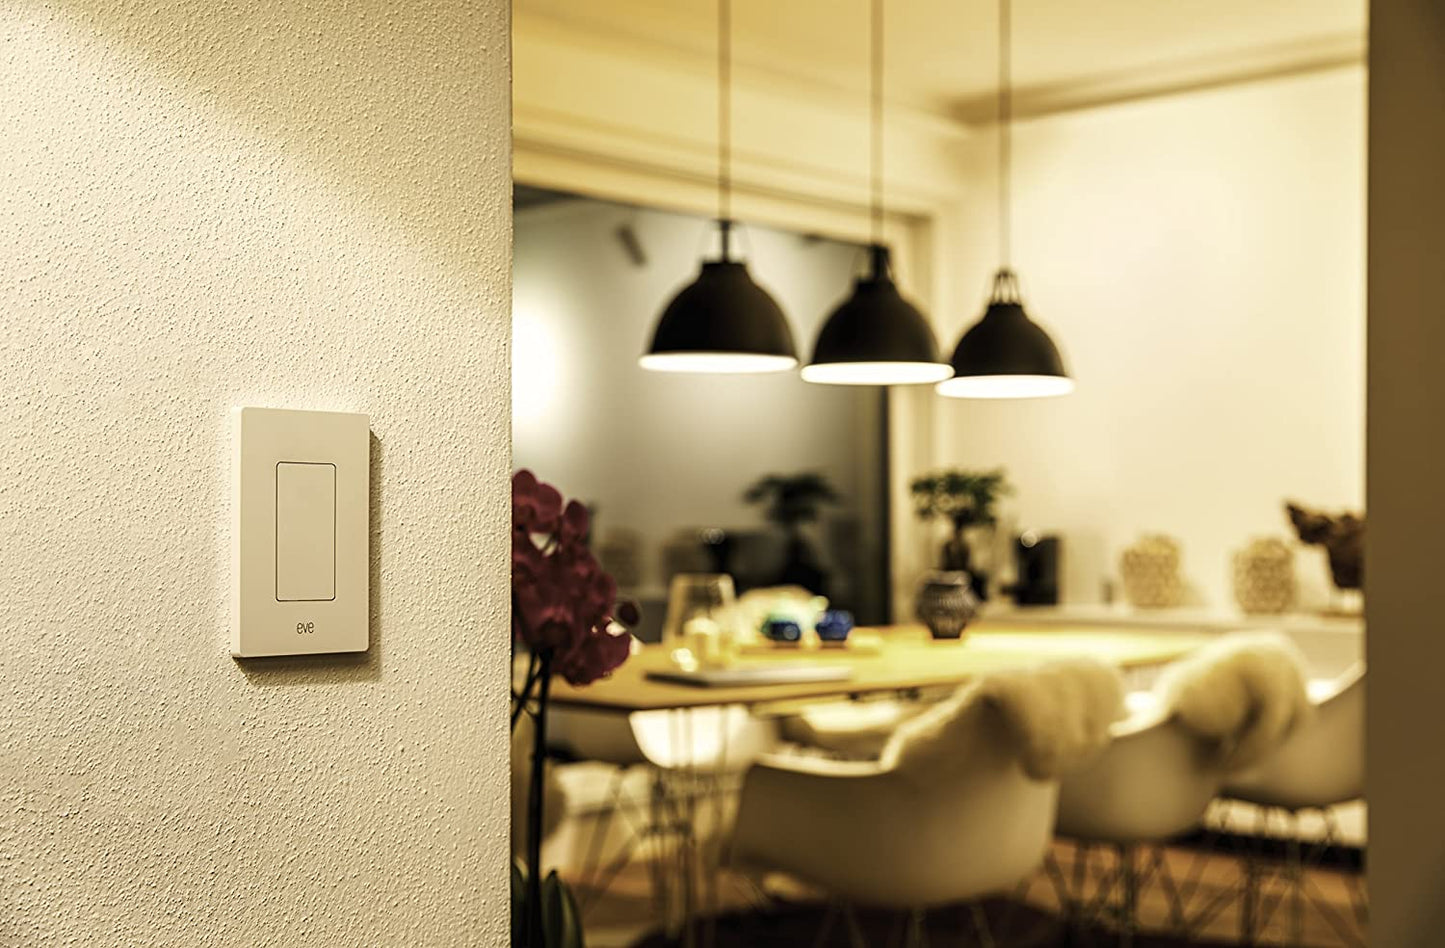 Eve Light Switch - Smart Wall Switch - Apple Homekit Compatible